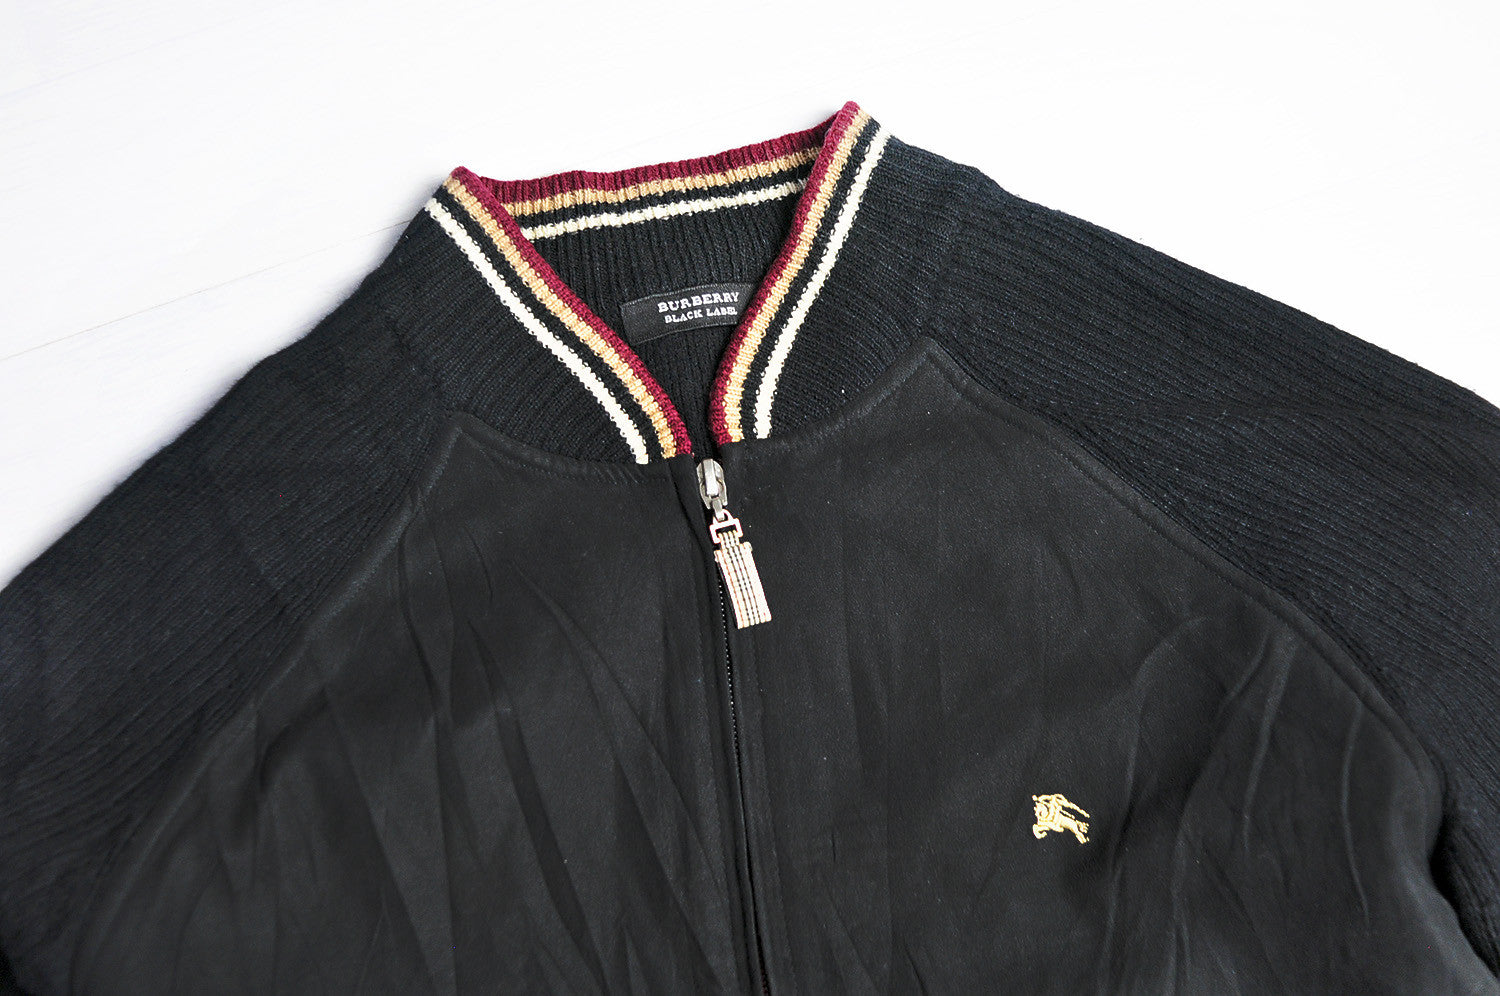 burberry black label jacket